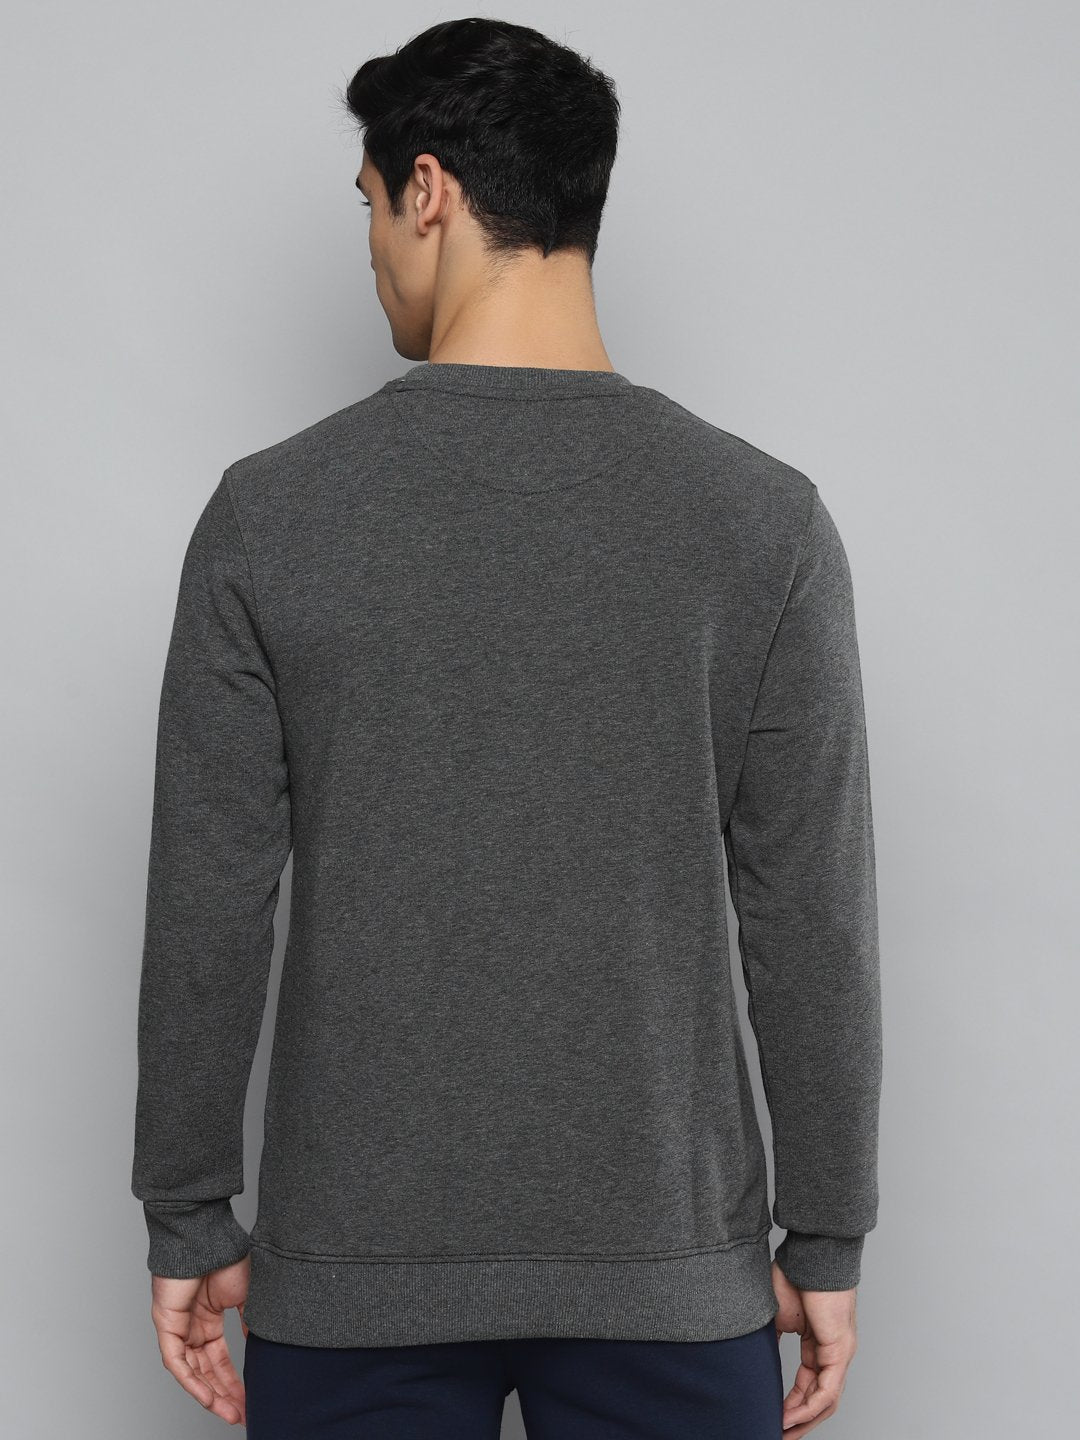 Alcis Men Charcoal Grey & White Typography Printed Cotton Sweatshirt